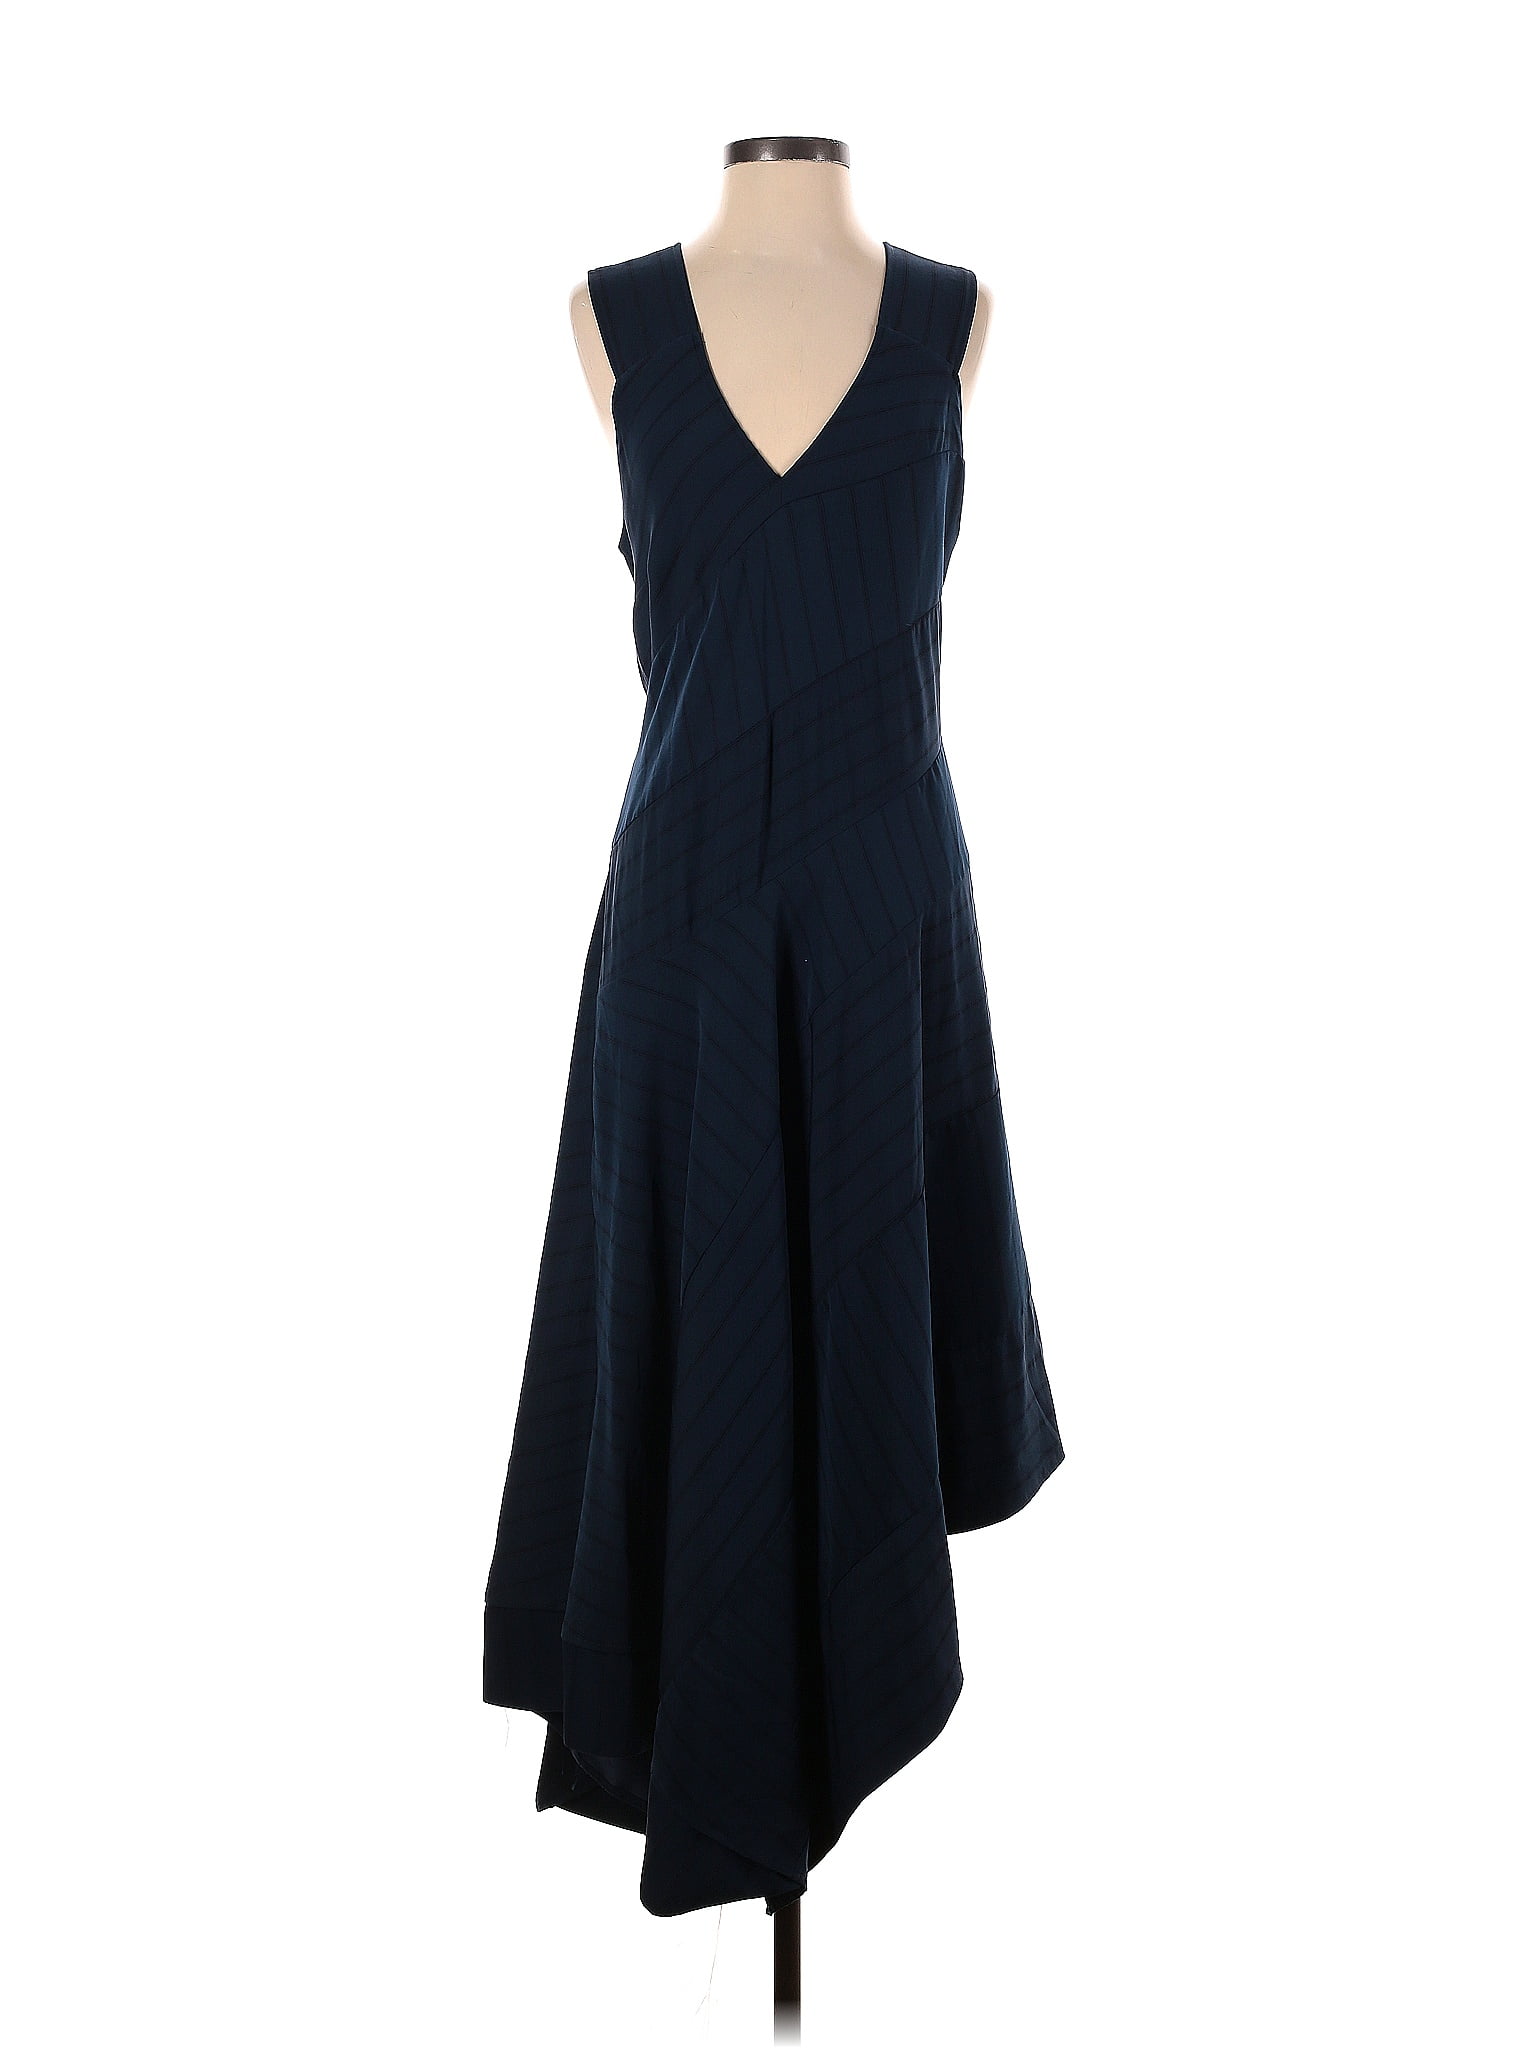 Derek Lam Collective Solid Navy Blue Asymmetrical Sleeveless Dress Size ...